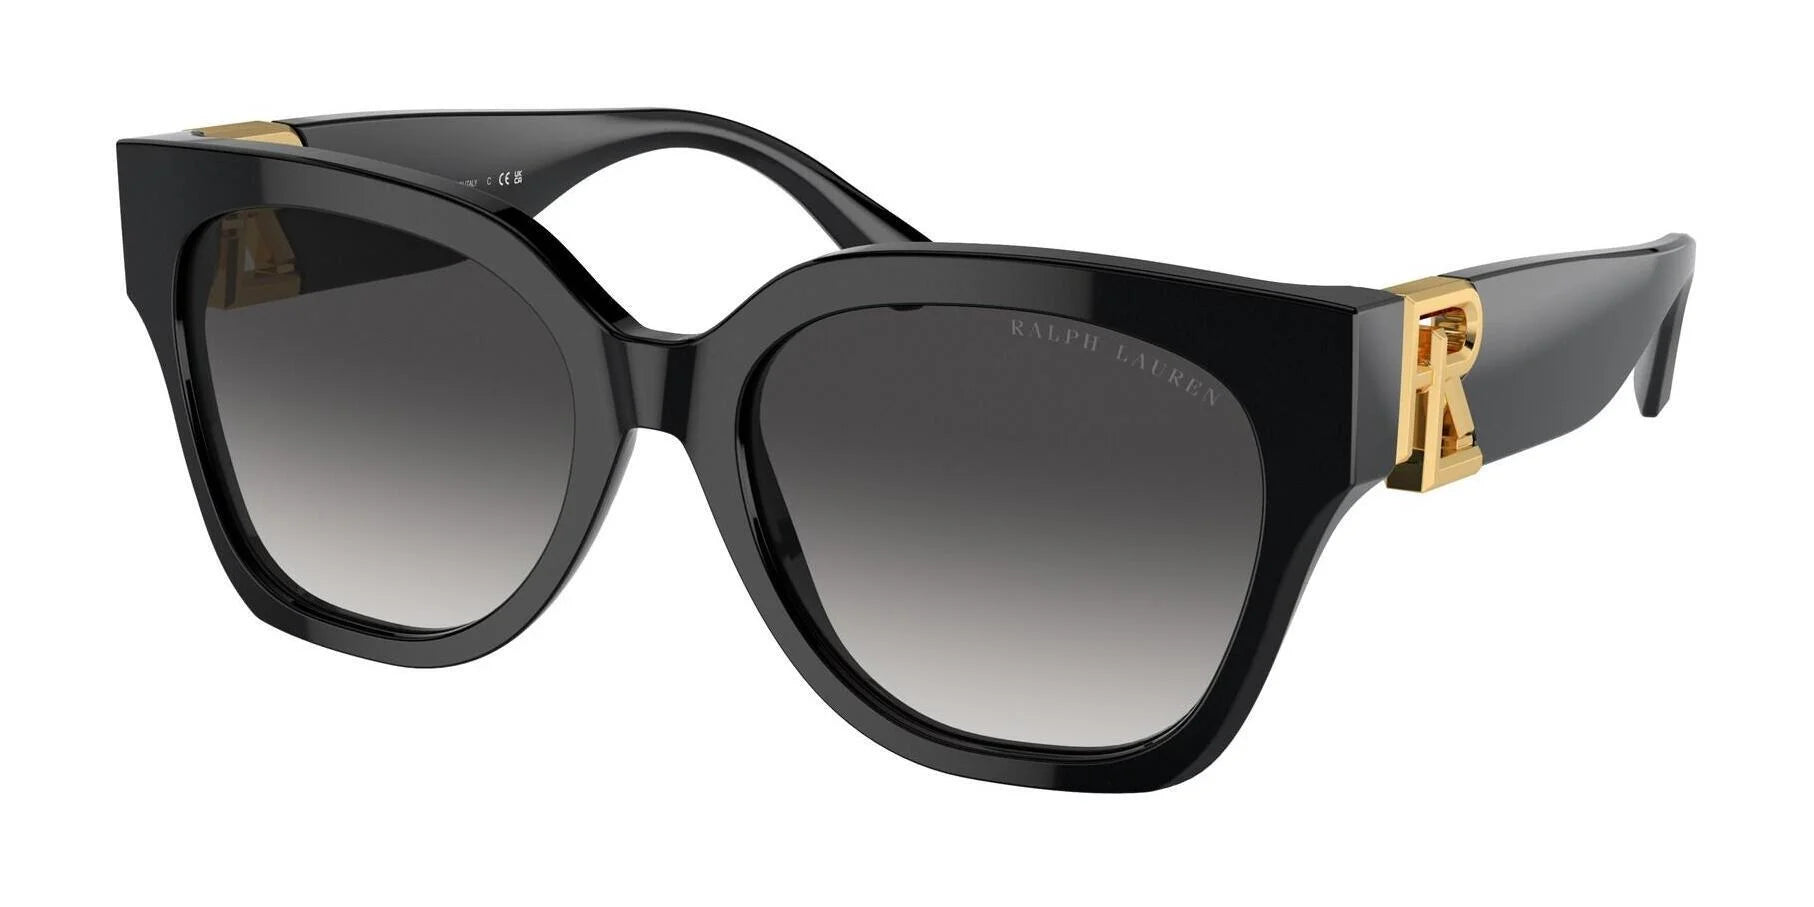 Ralph Lauren THE OVERSZED RICKY RL8221 Sunglasses Black / Grey Gradient